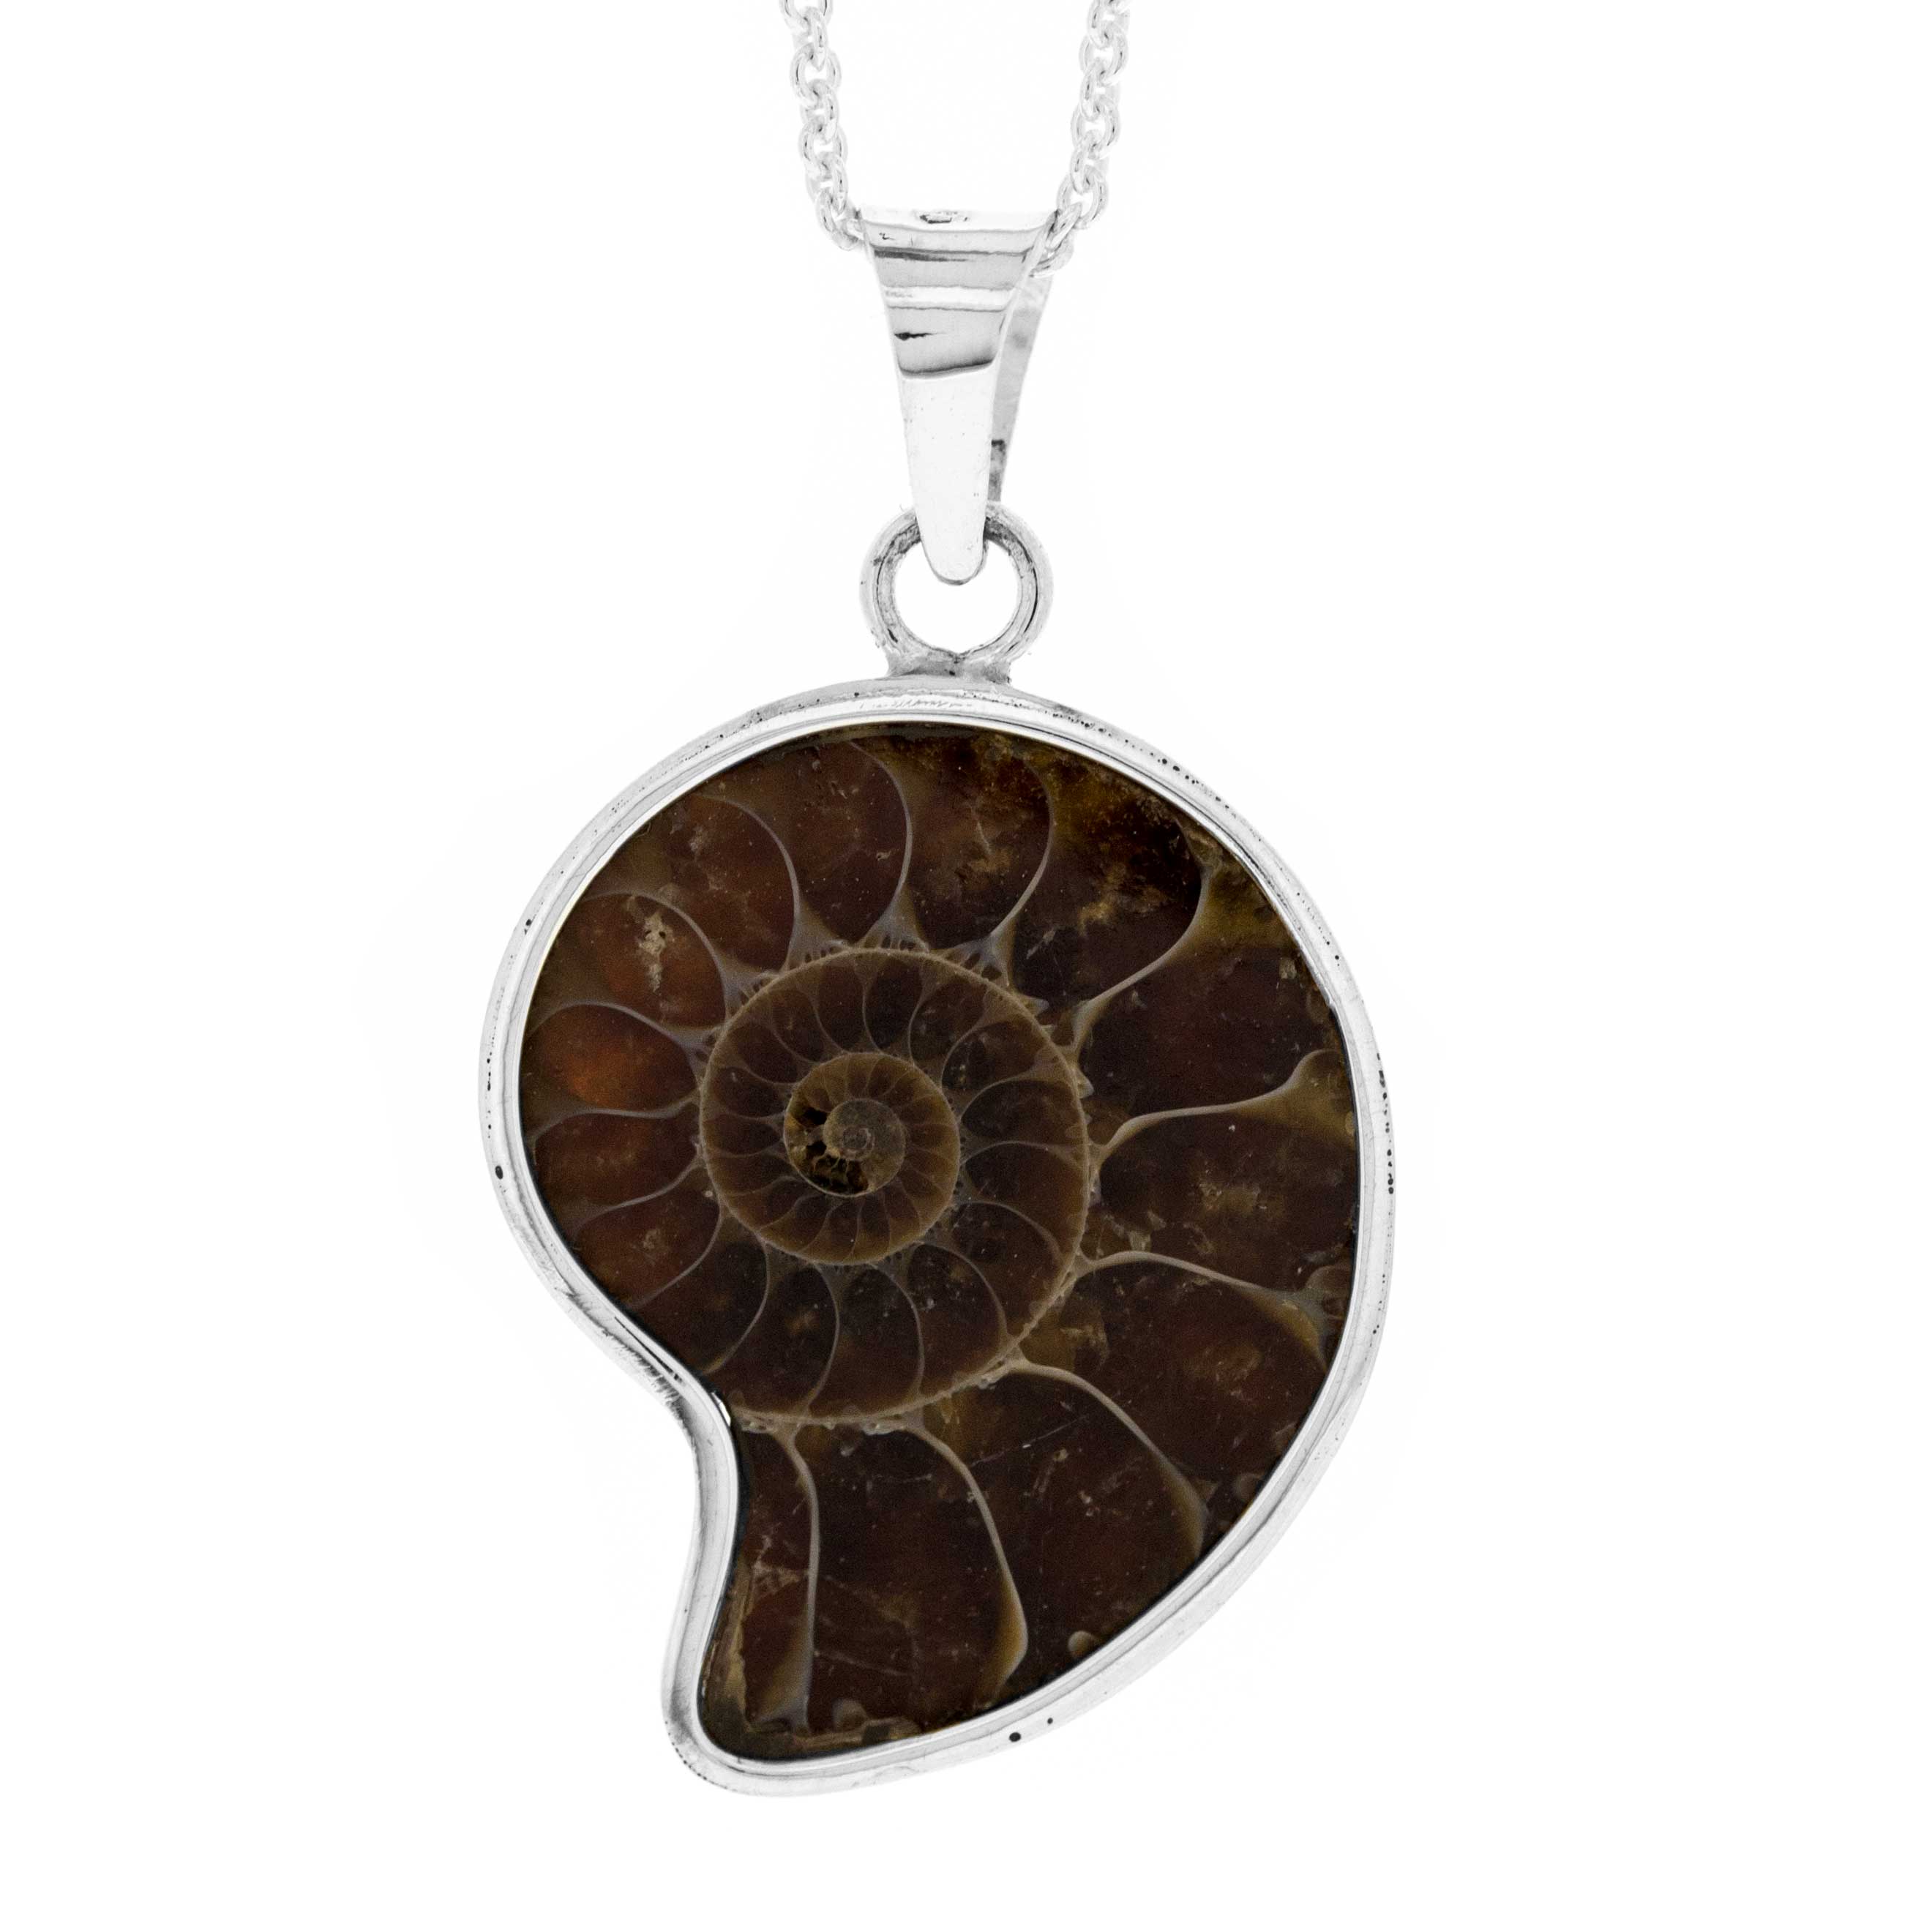 Bemine Small Ammonite Pendant